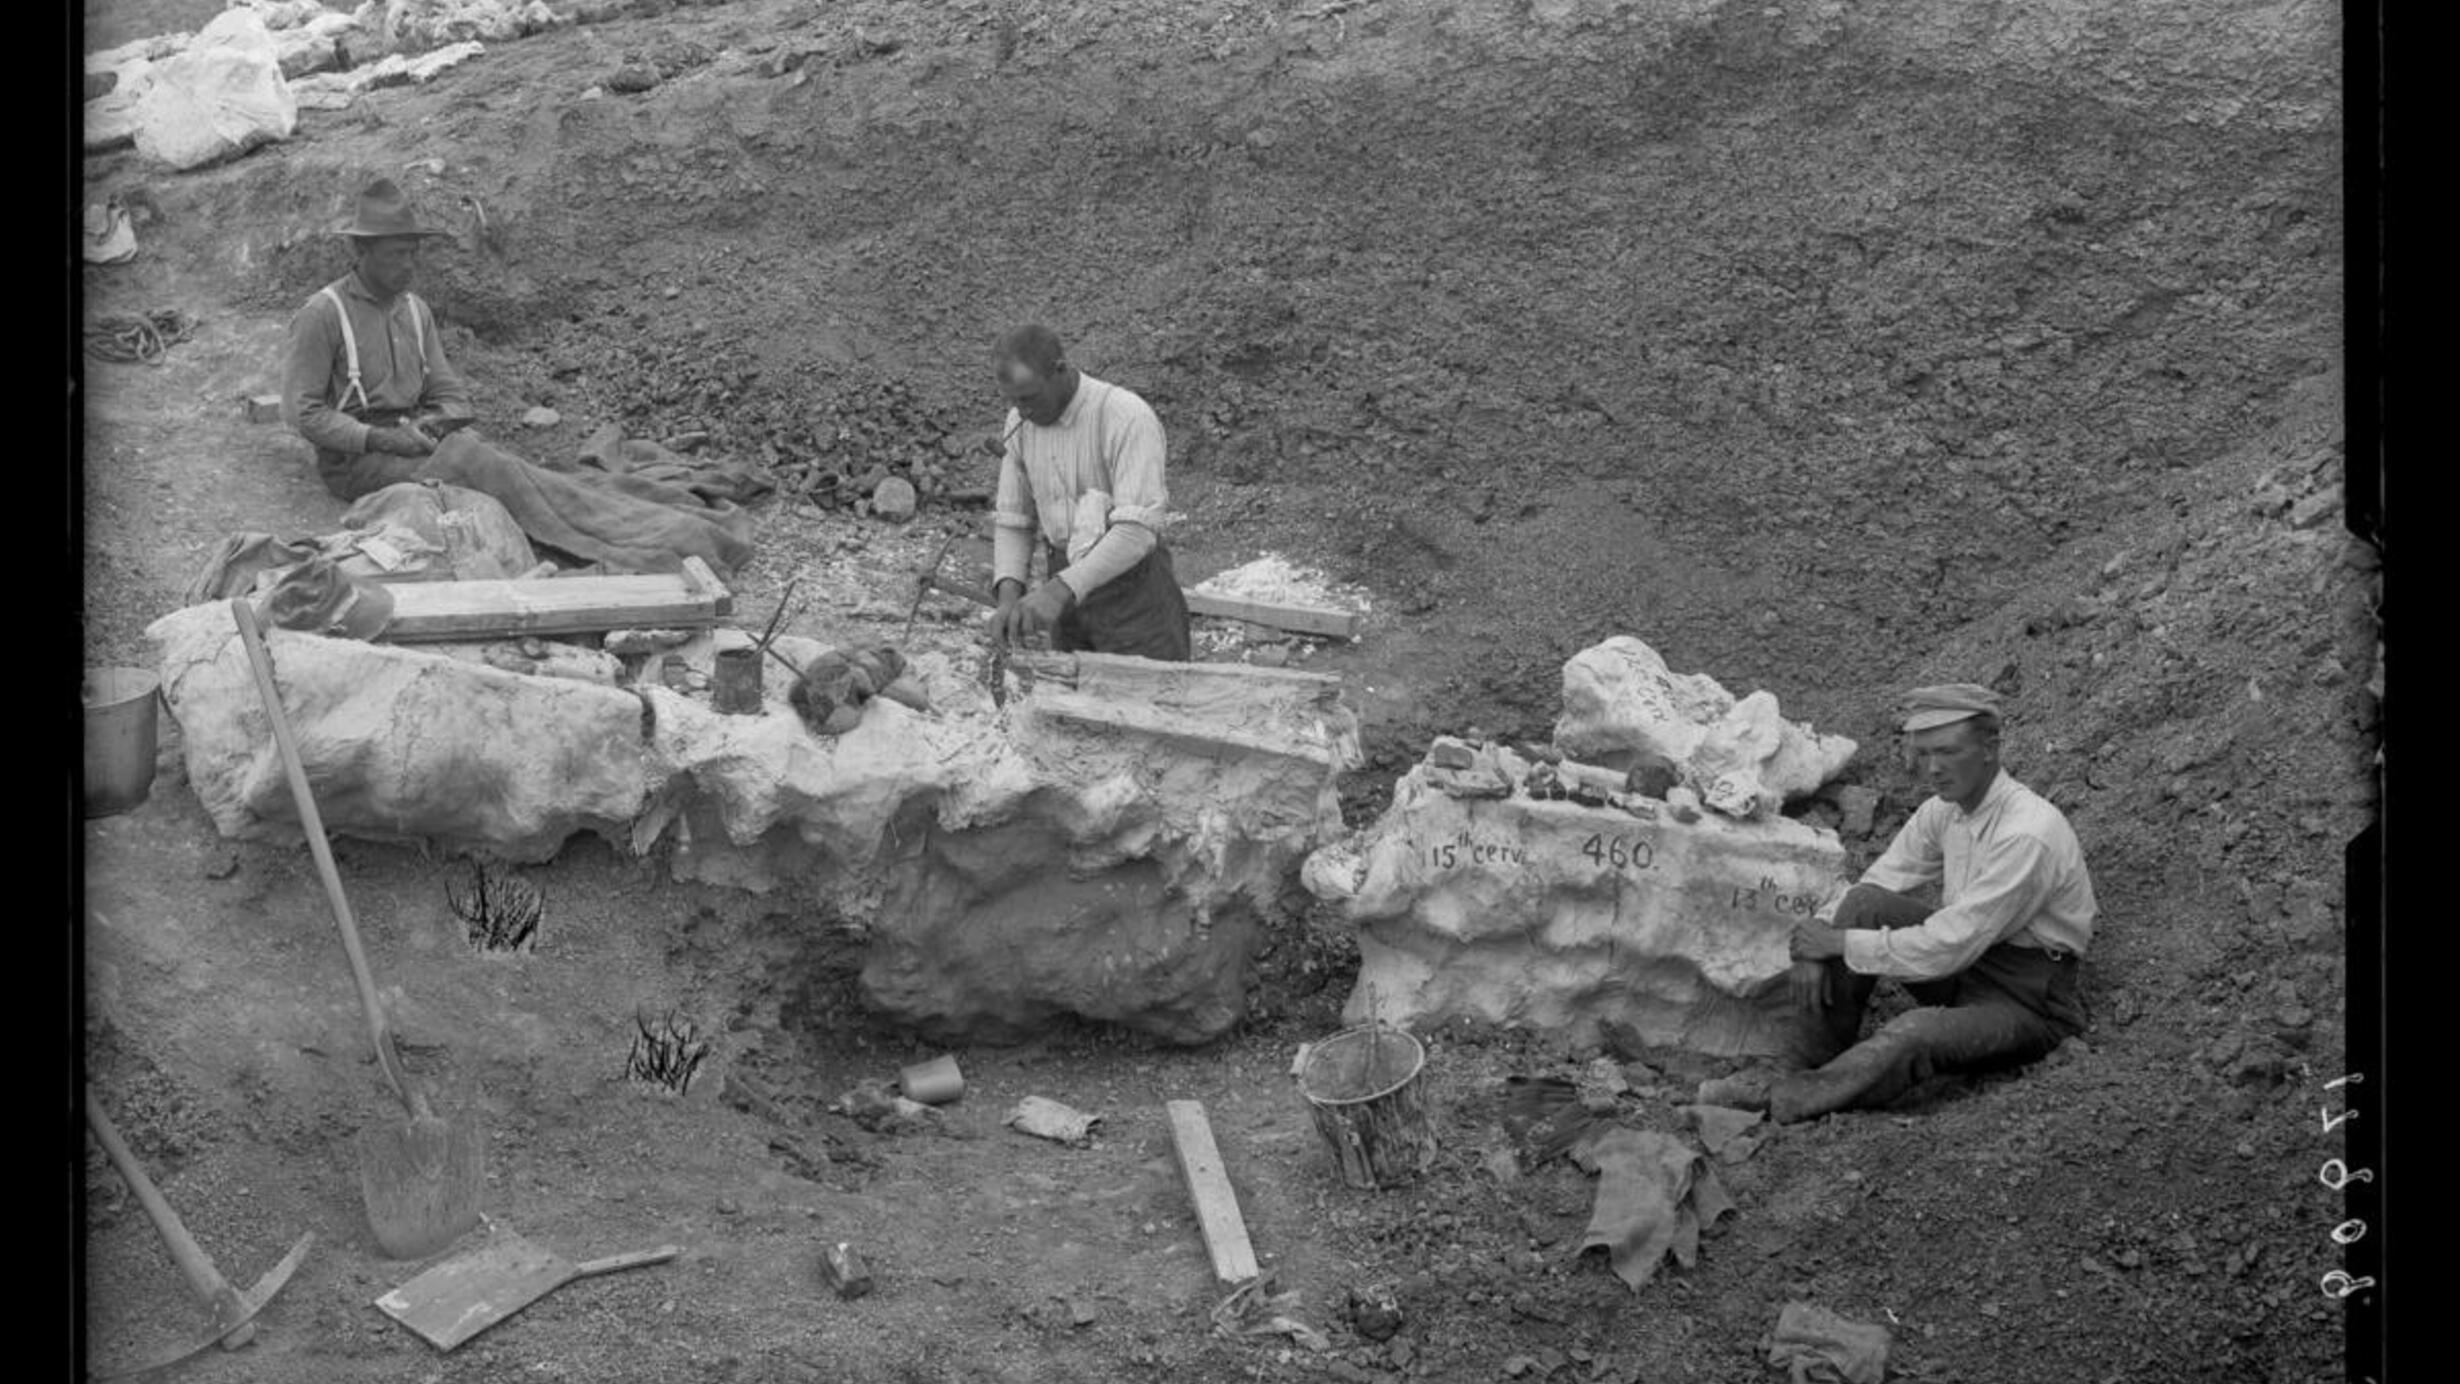 Plastering brontosaurus vertebrae, Nine Mile Quarry, Wyoming, 1899, AMNH Library Image #17909